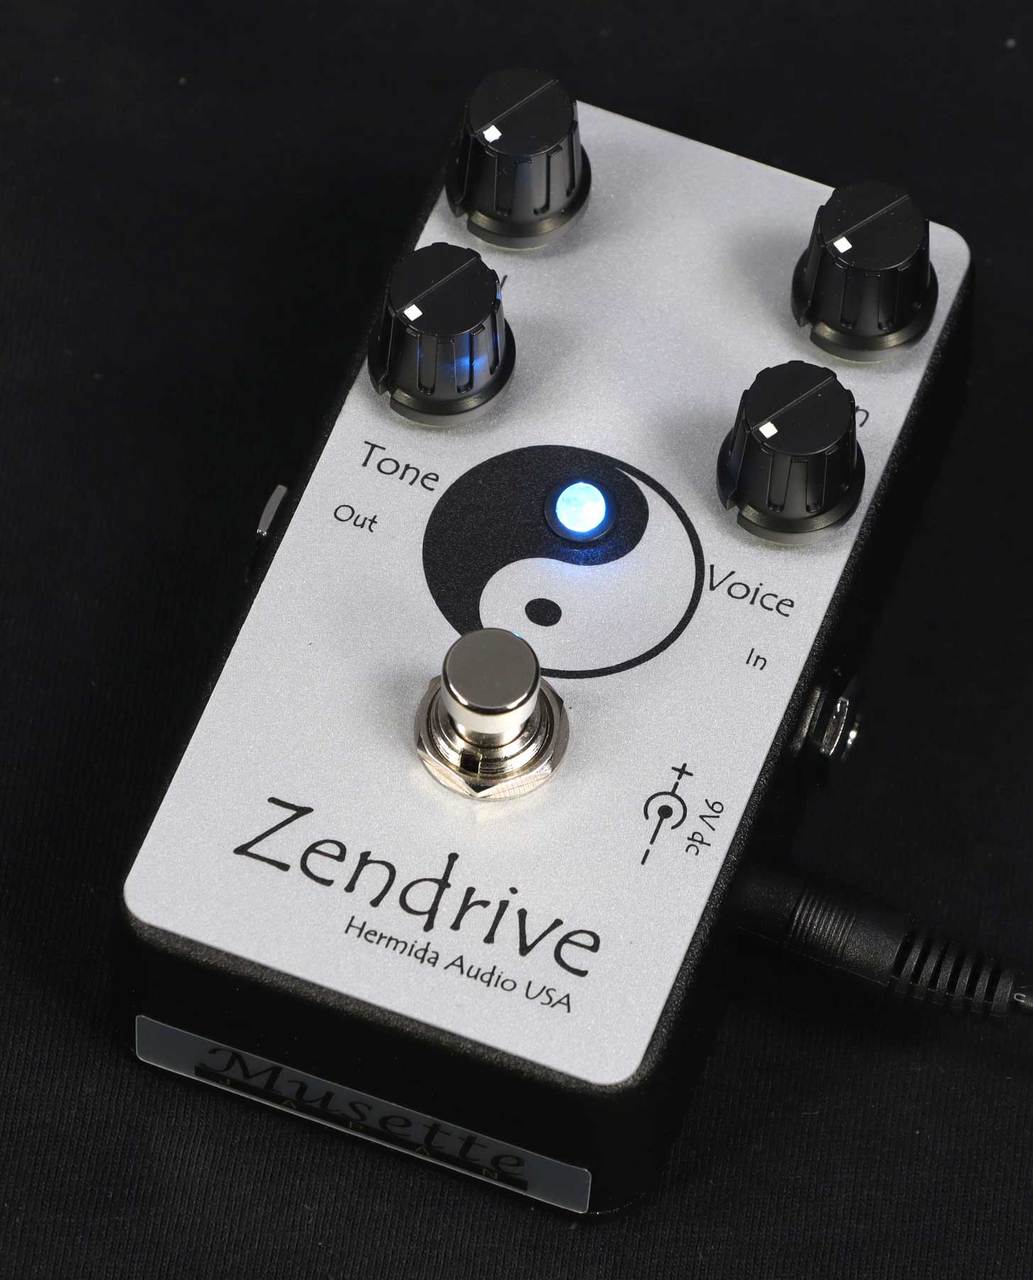 Zendrive Zen drive hermida audio usa